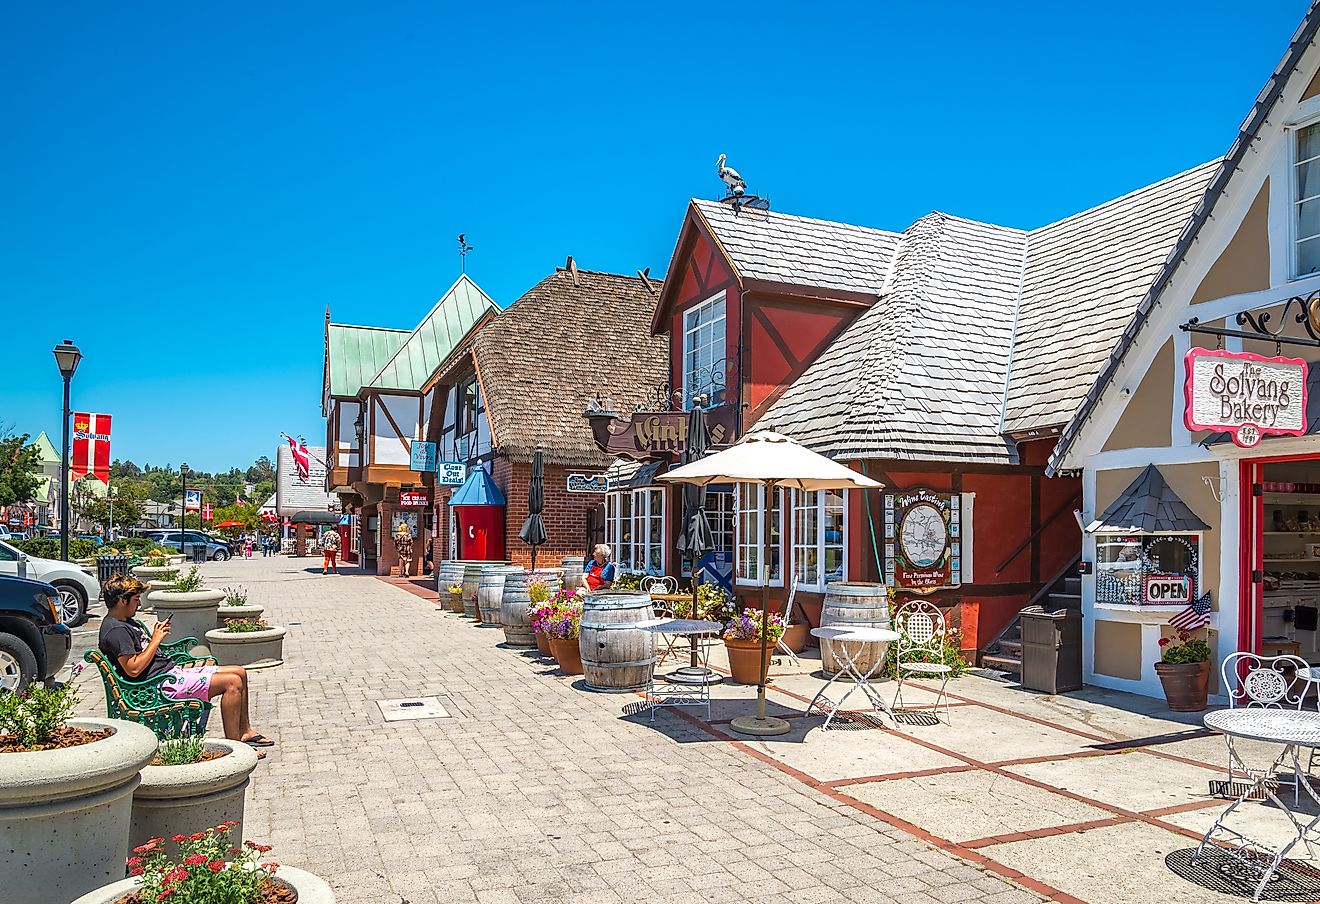 House in the Danish style, Solvang, California, village in Santa Barbara County, via NaughtyNut / Shutterstock.com